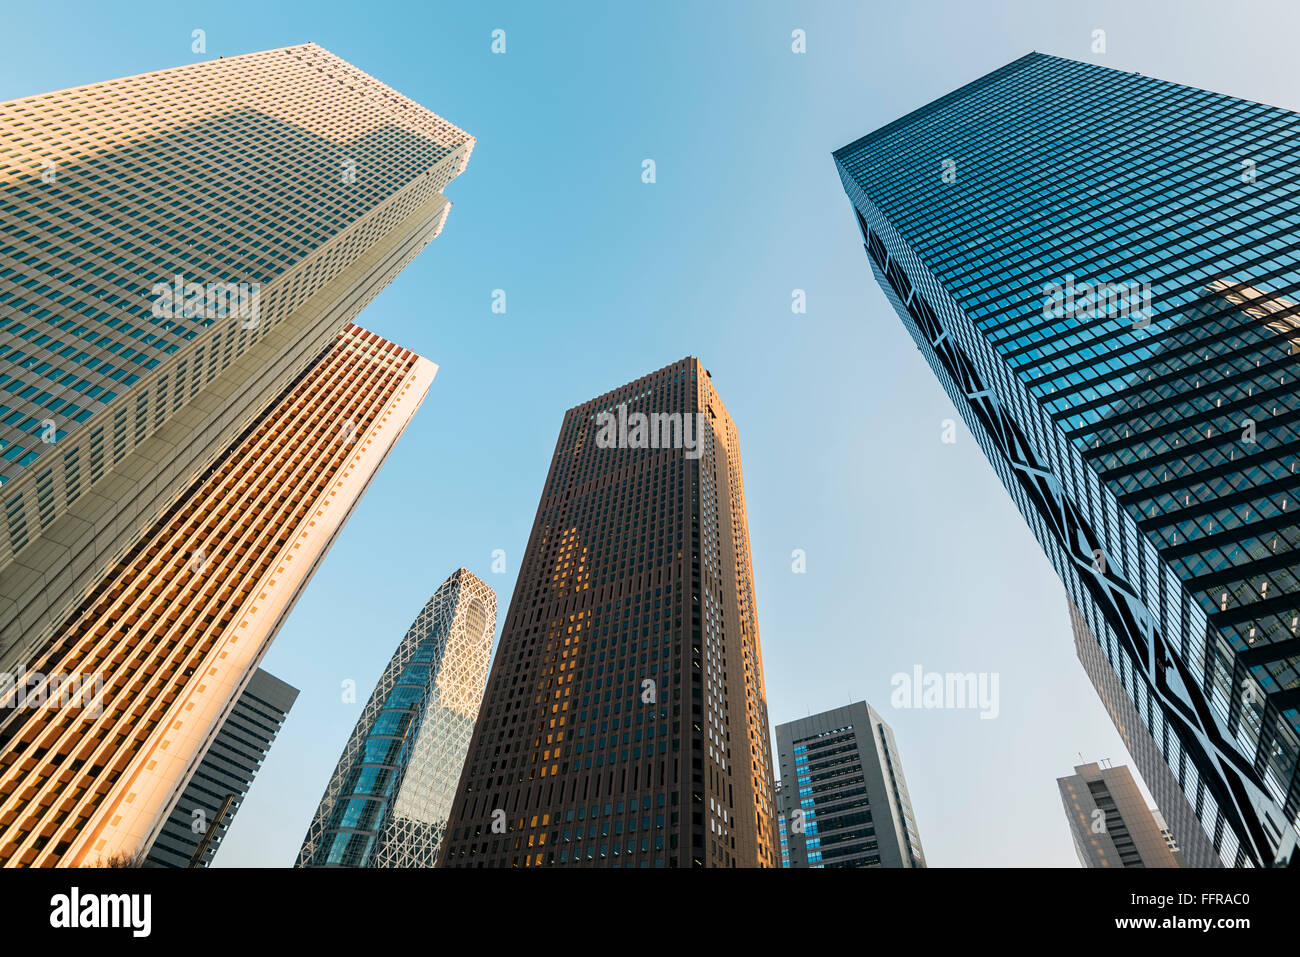 Skyscrapers in Shinjuku, Tokyo - Japan Stock Photo